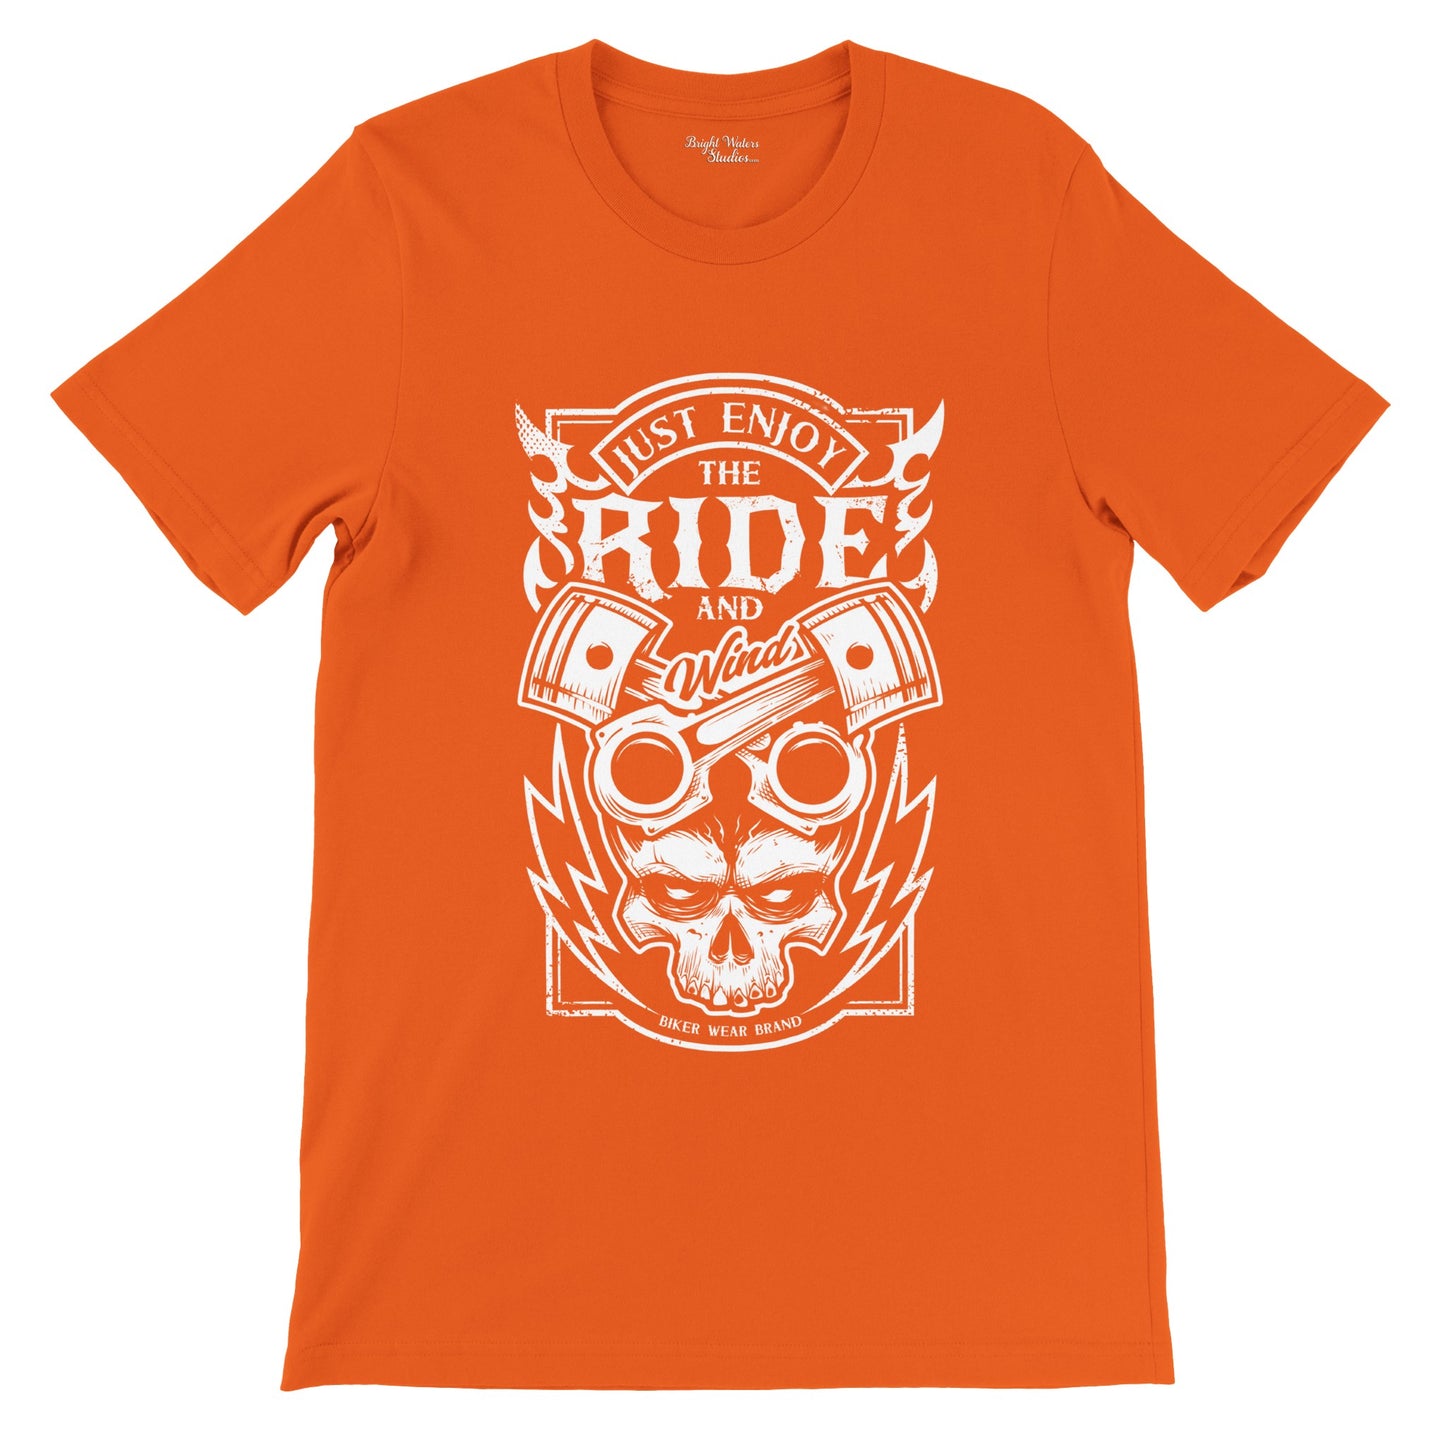 Enjoy the Ride T-shirt